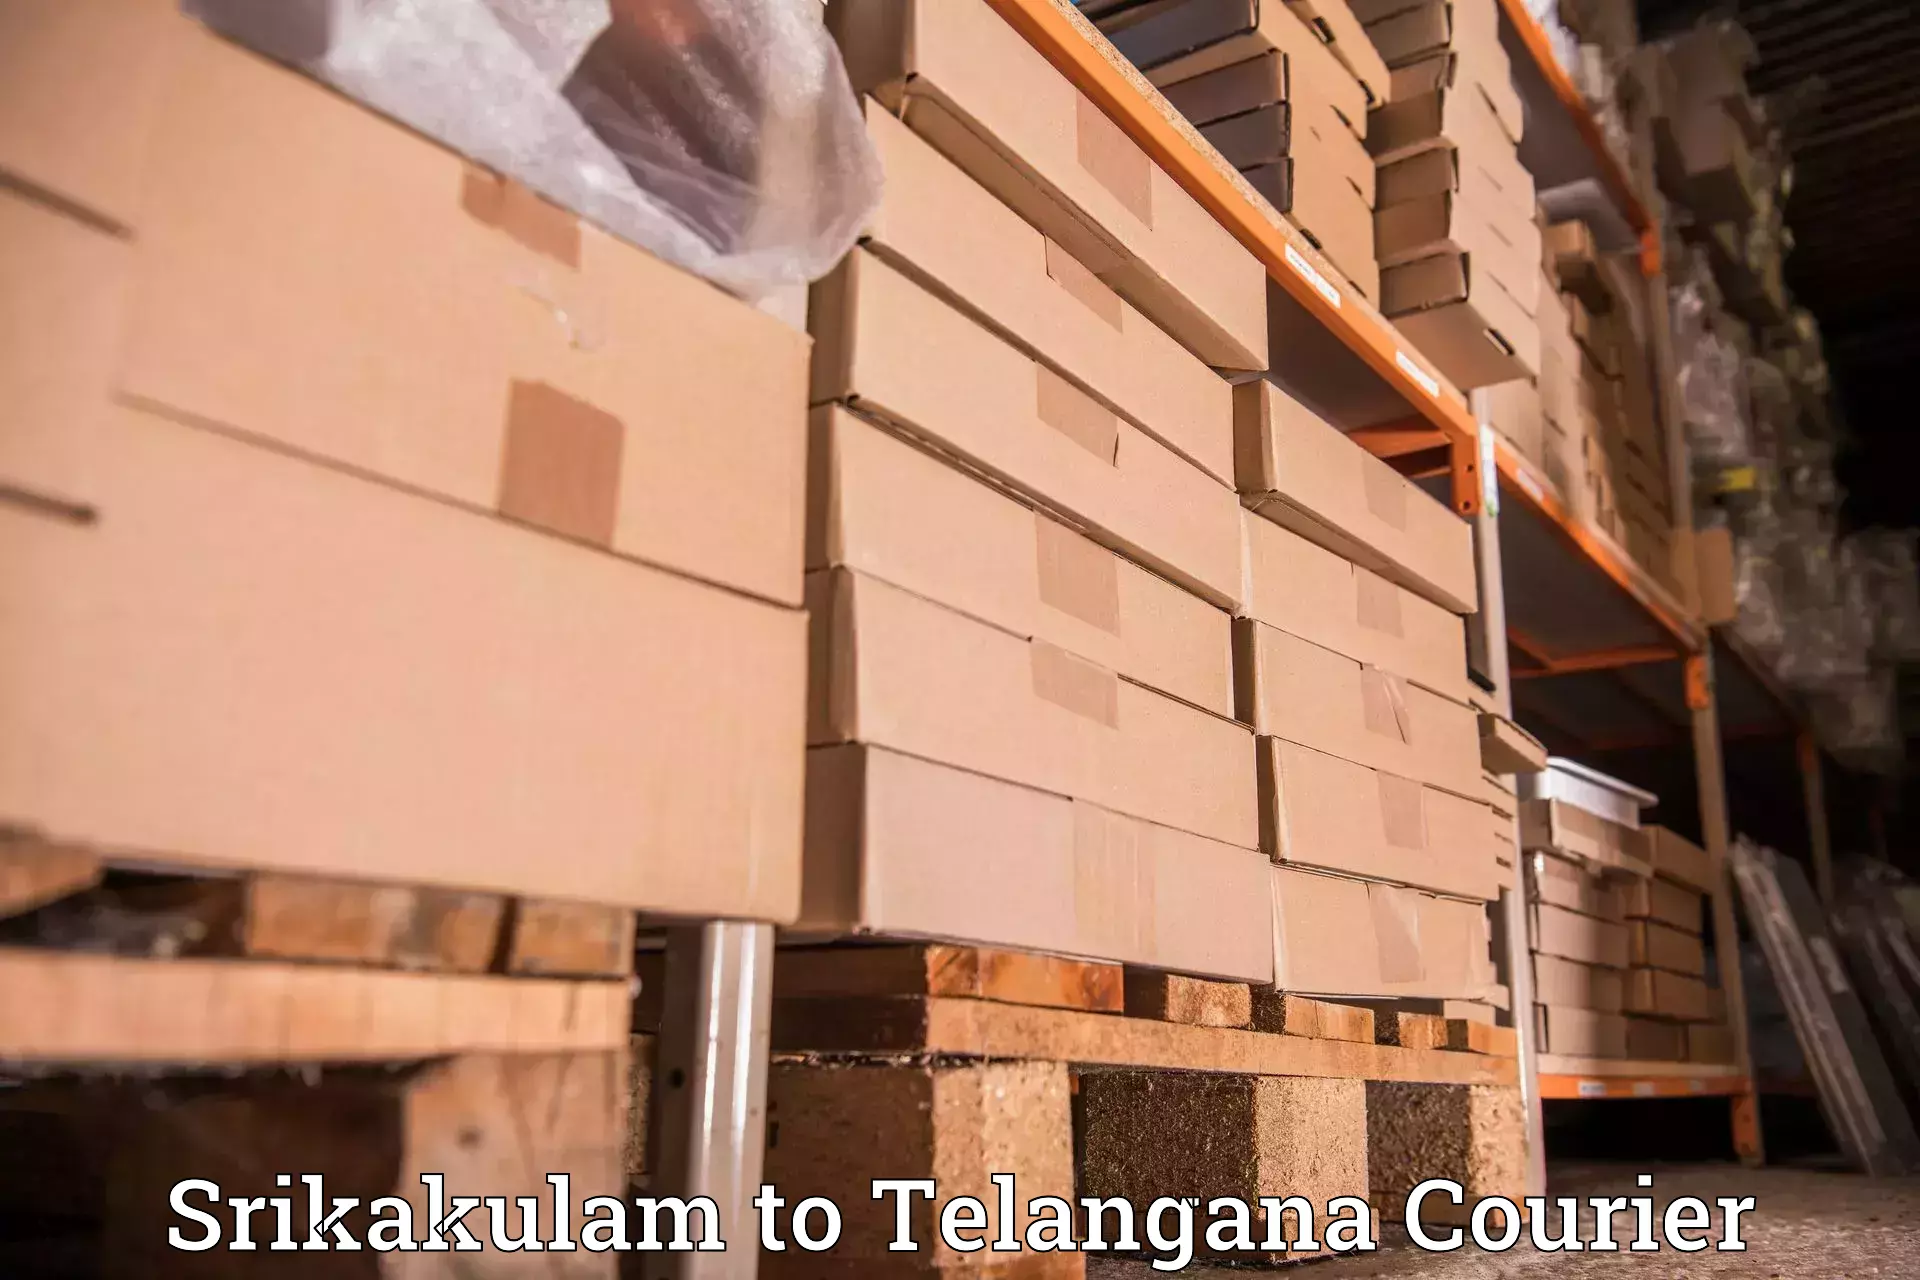 Global logistics network Srikakulam to Tallada